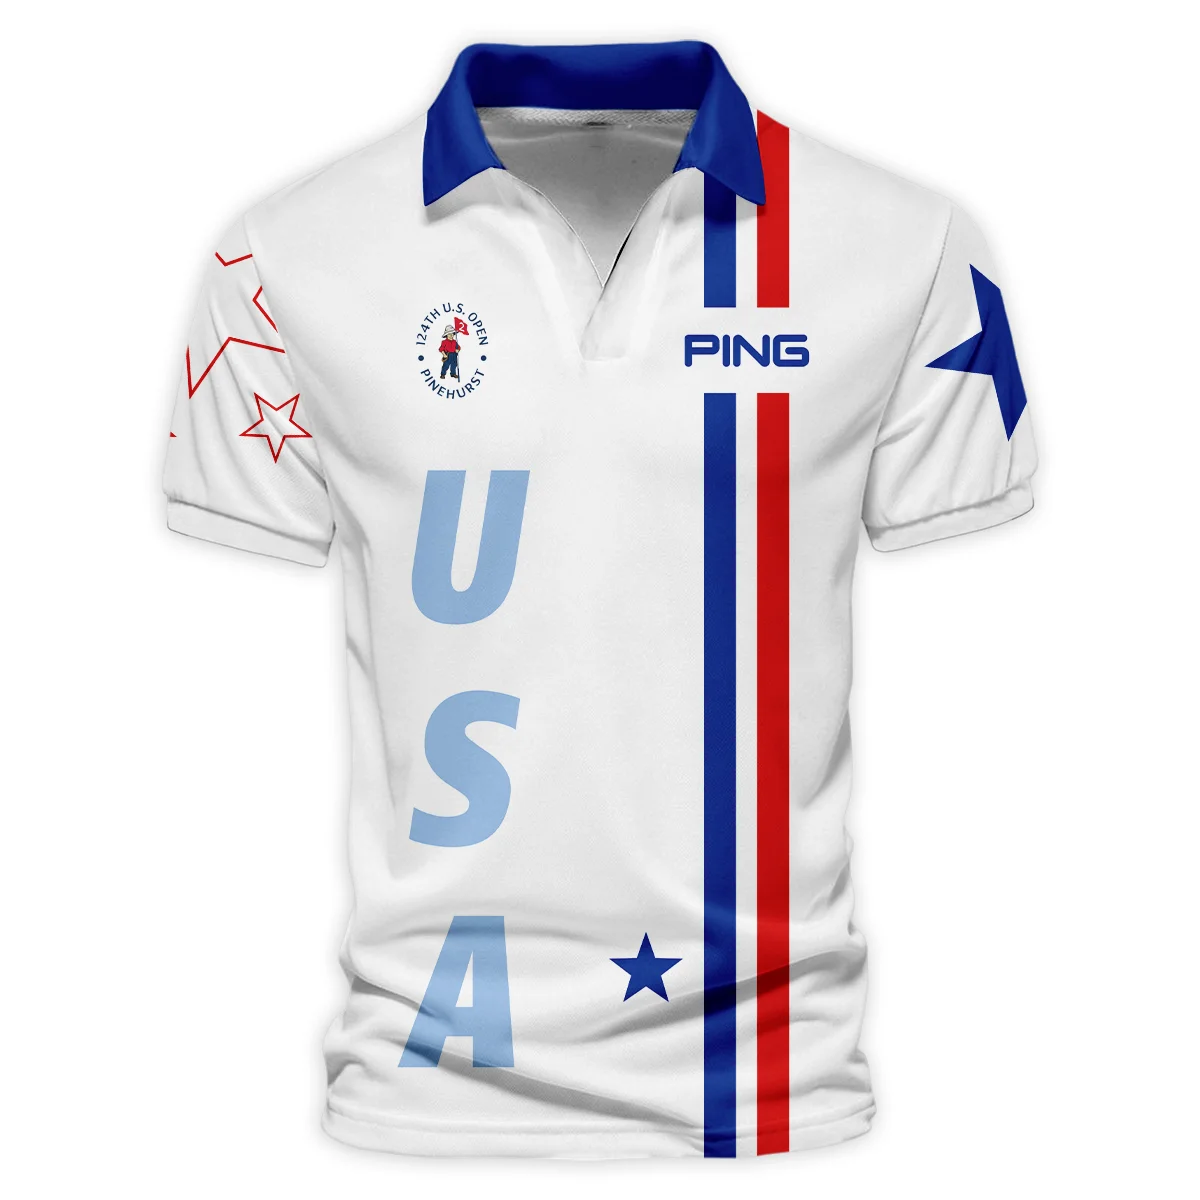 124th U.S. Open Pinehurst Ping Blue Red Line White Polo Shirt Mandarin Collar Polo Shirt